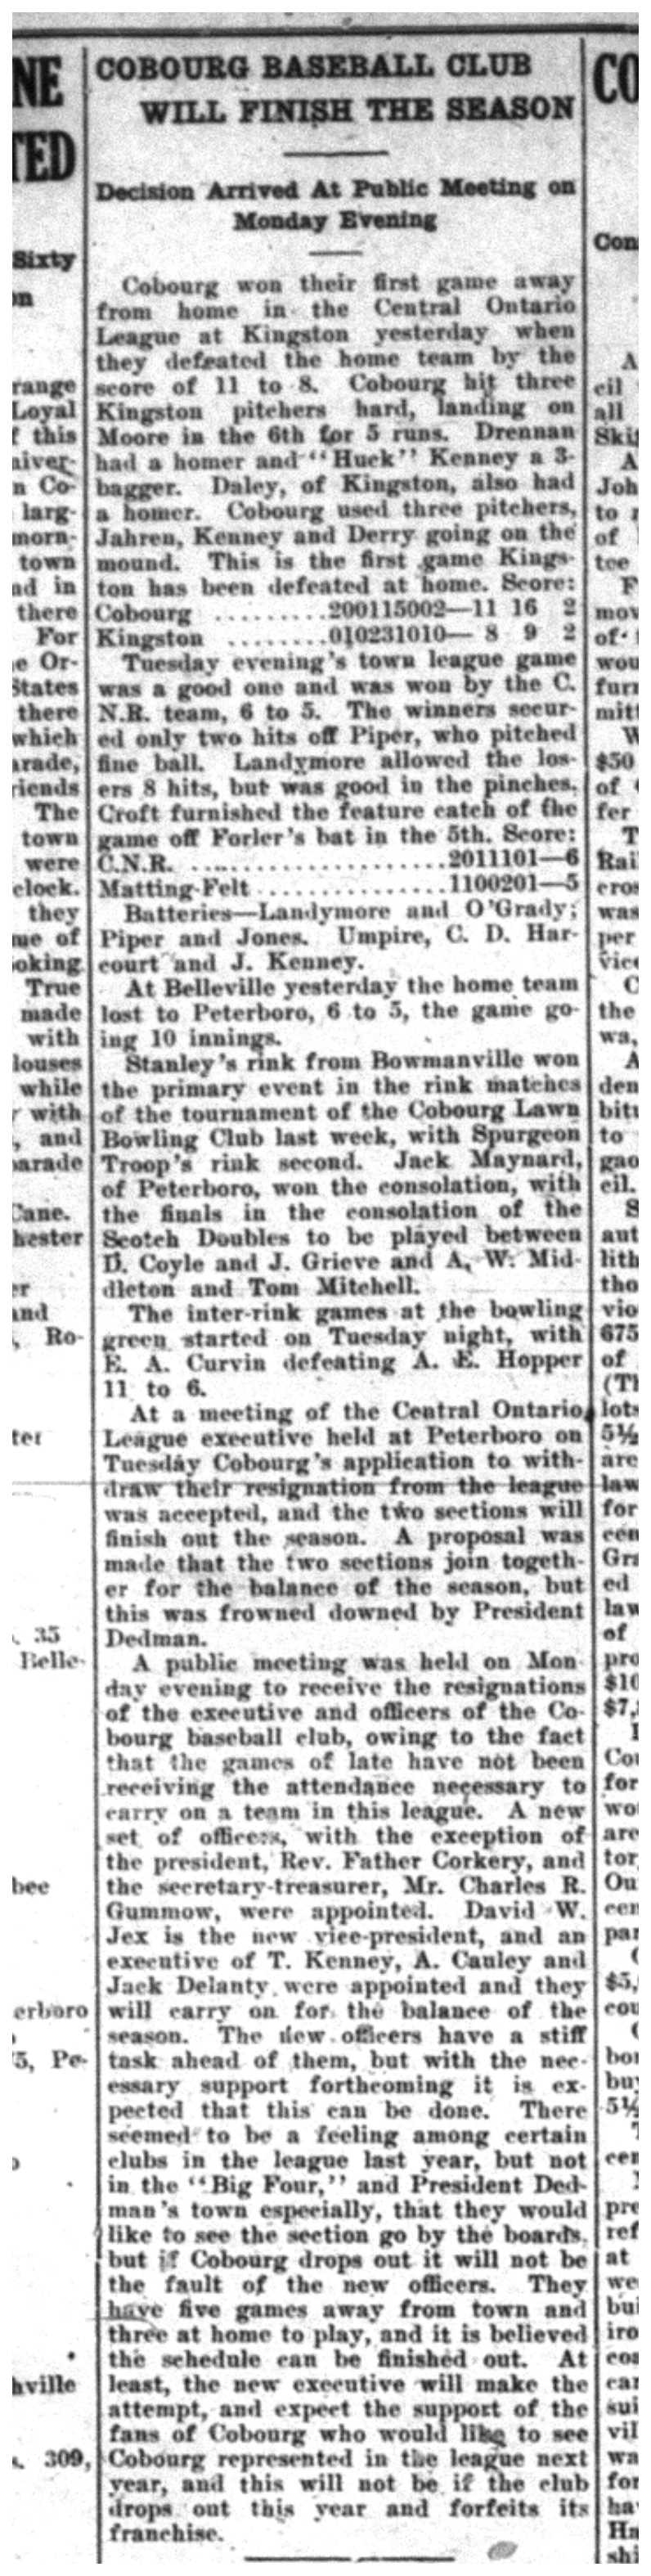 1923-07-19 Baseball -Cobourg stays in COBL